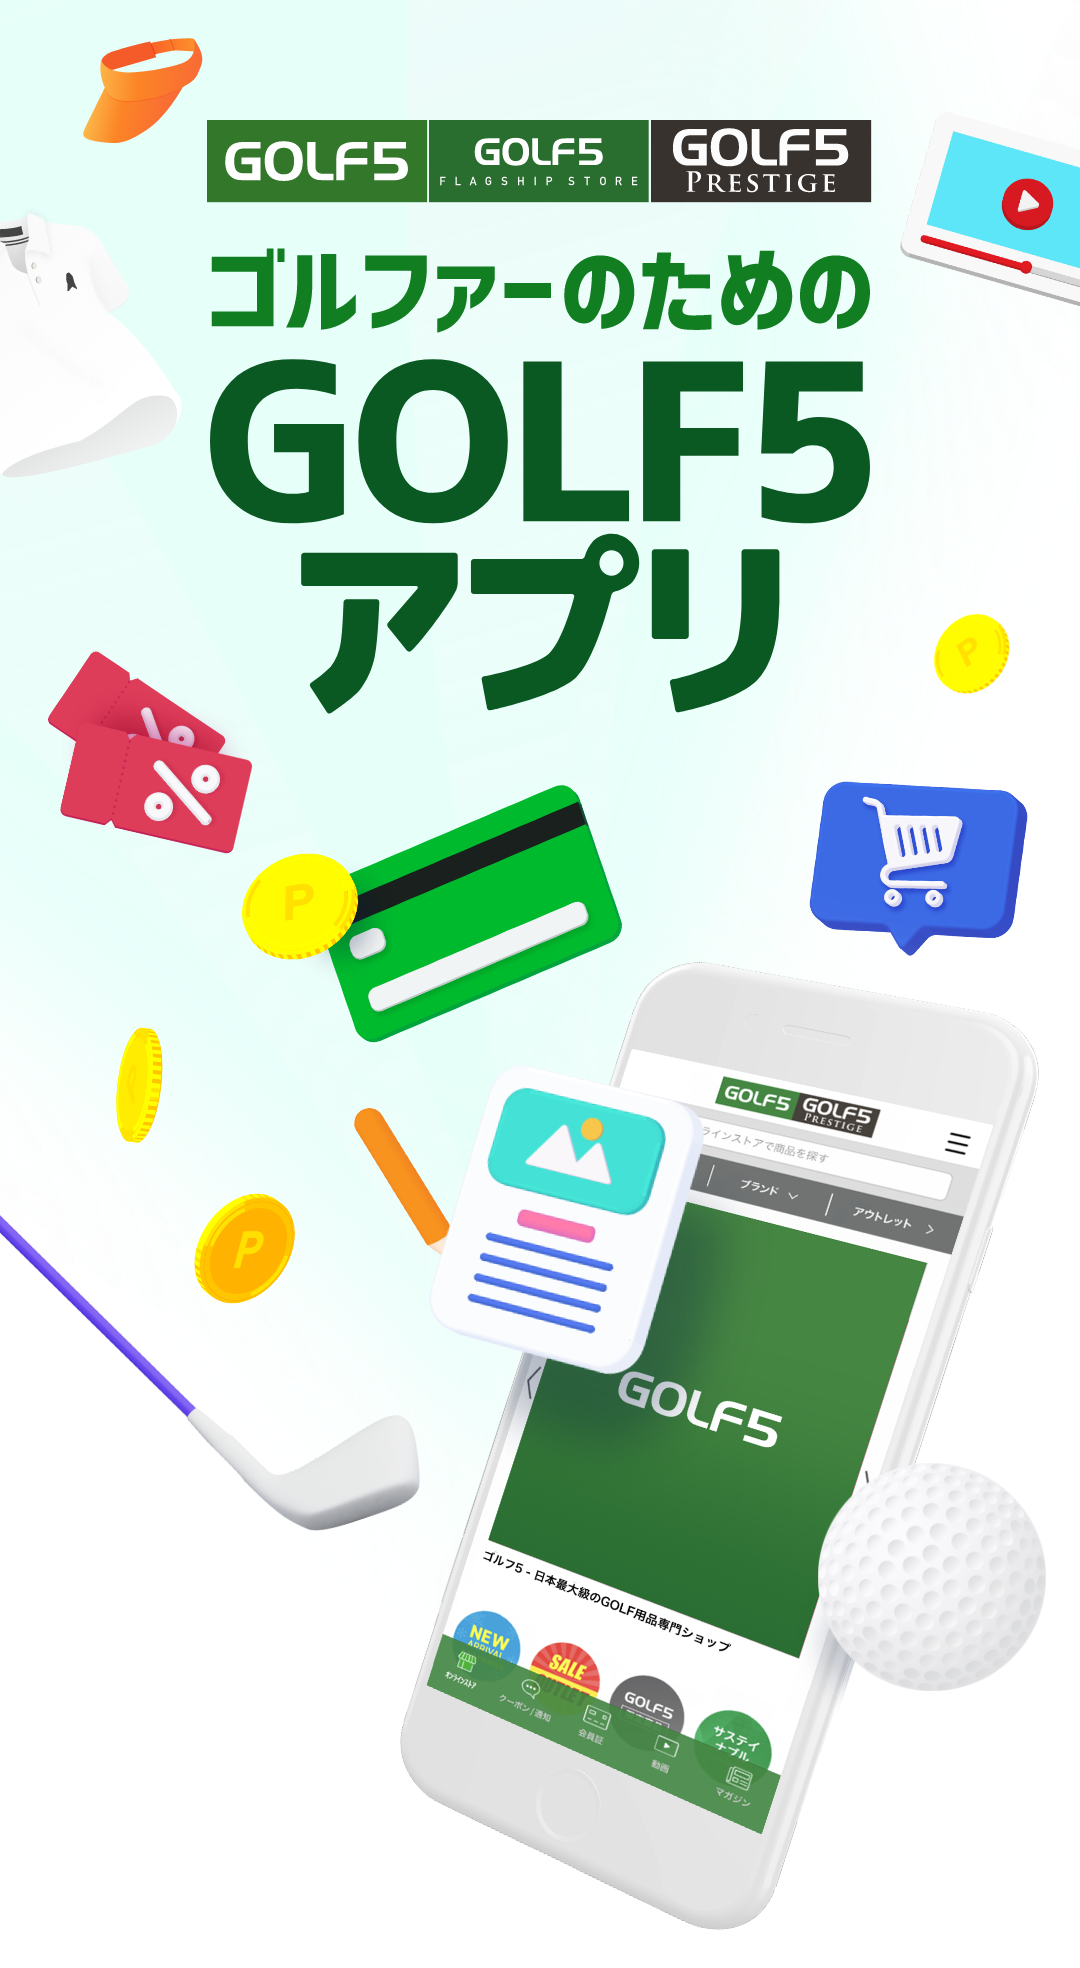 GOLF5 / GOLF5 FLAGSHIP STORE / GOLF5 PRESTIGE ゴルファーのためのGOLF5アプリ